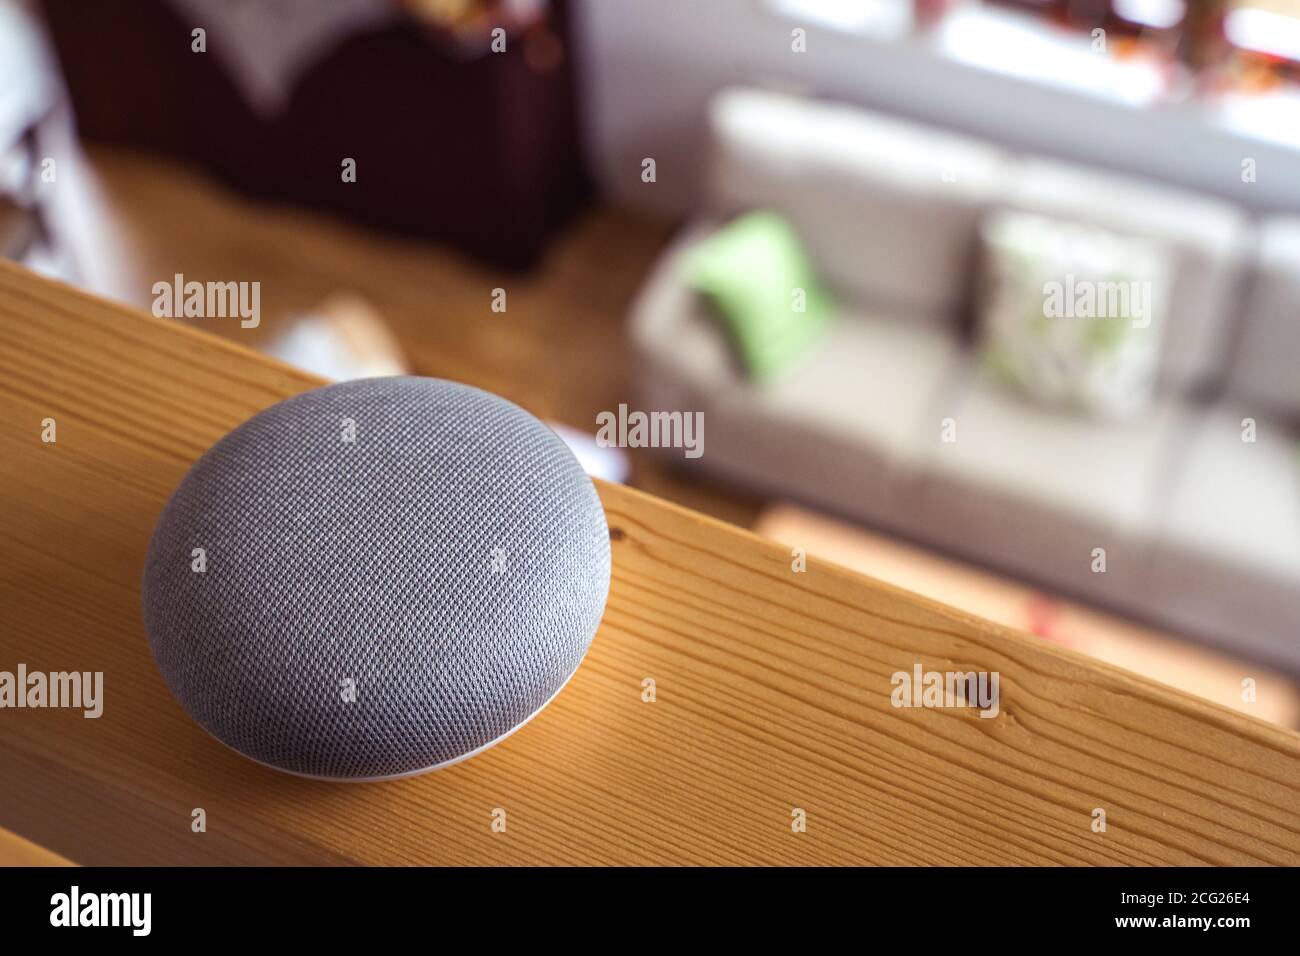 Smart speaker in home interior Stock Photo